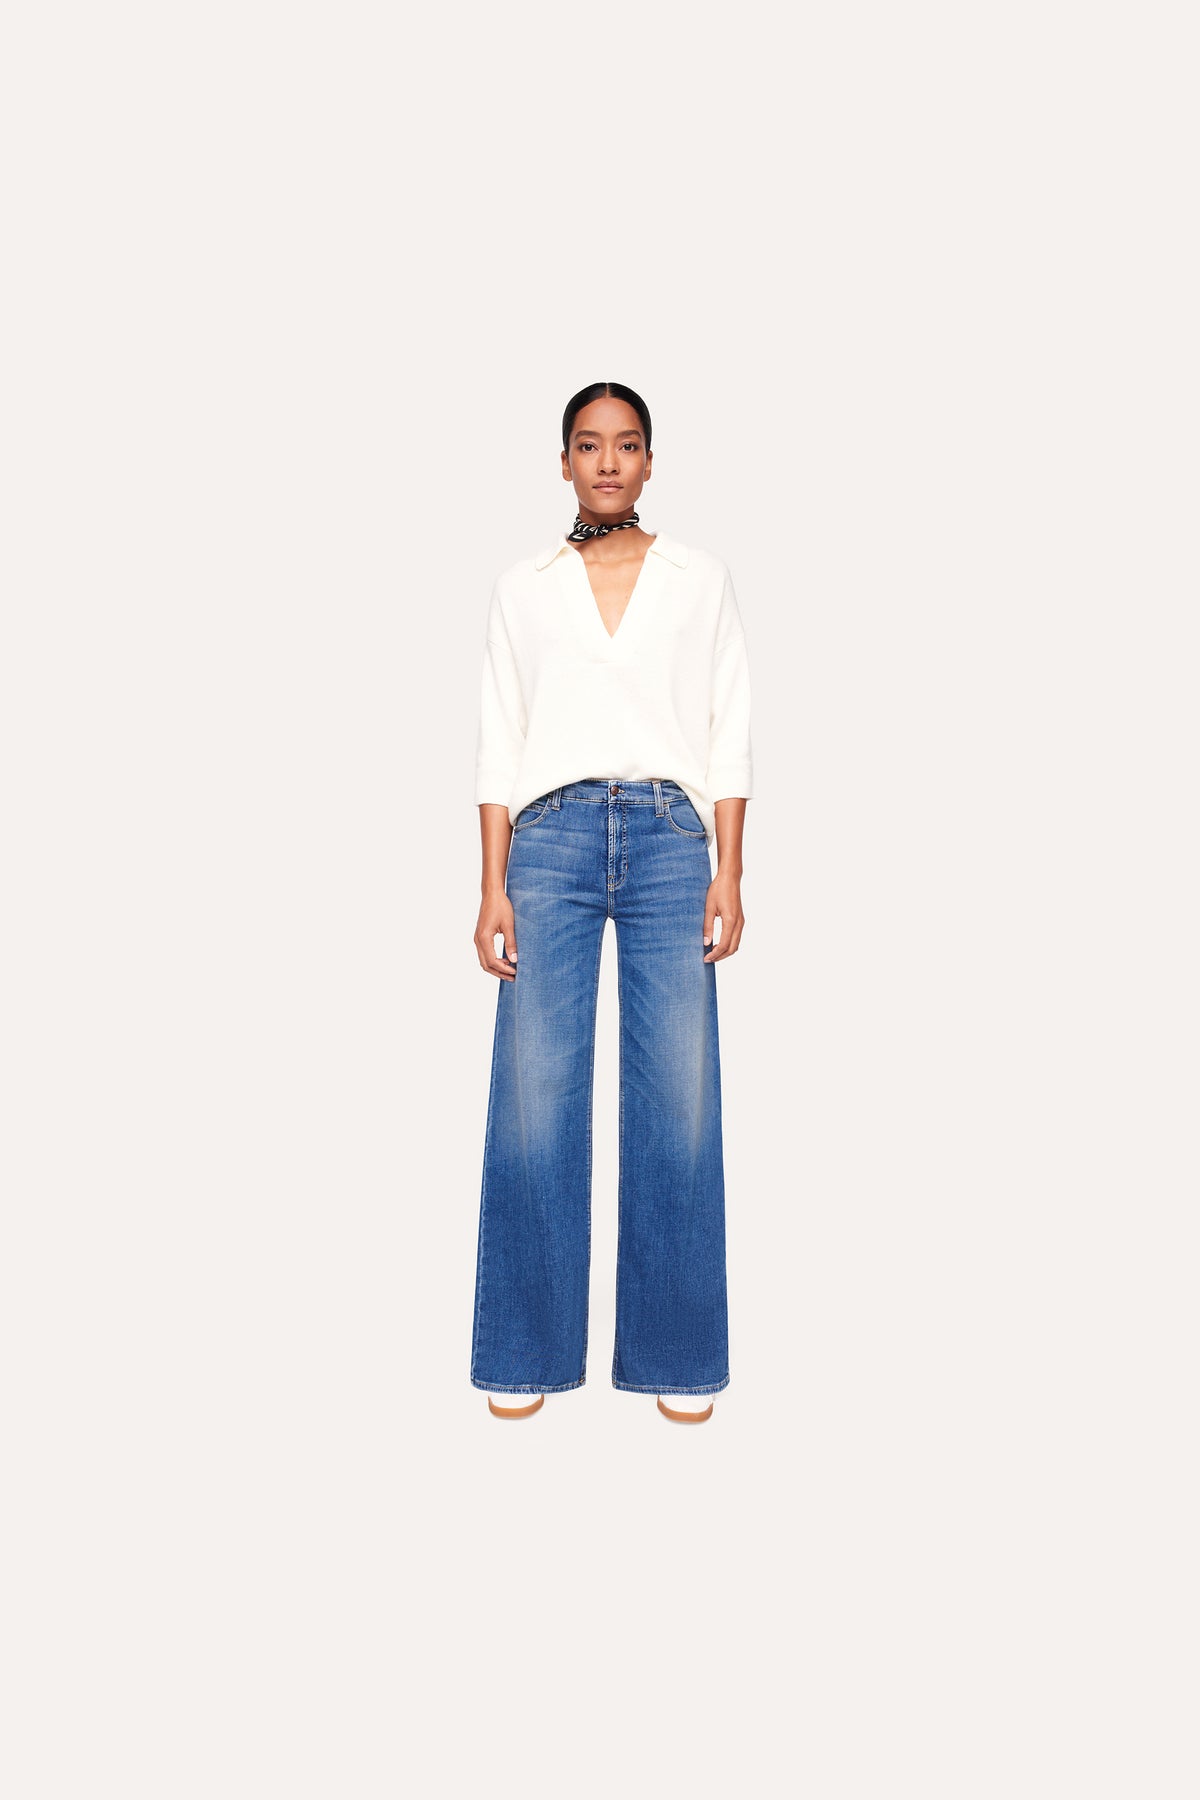 Cambio – Unsere Auswahl an Damen Jeans – CAMBIO